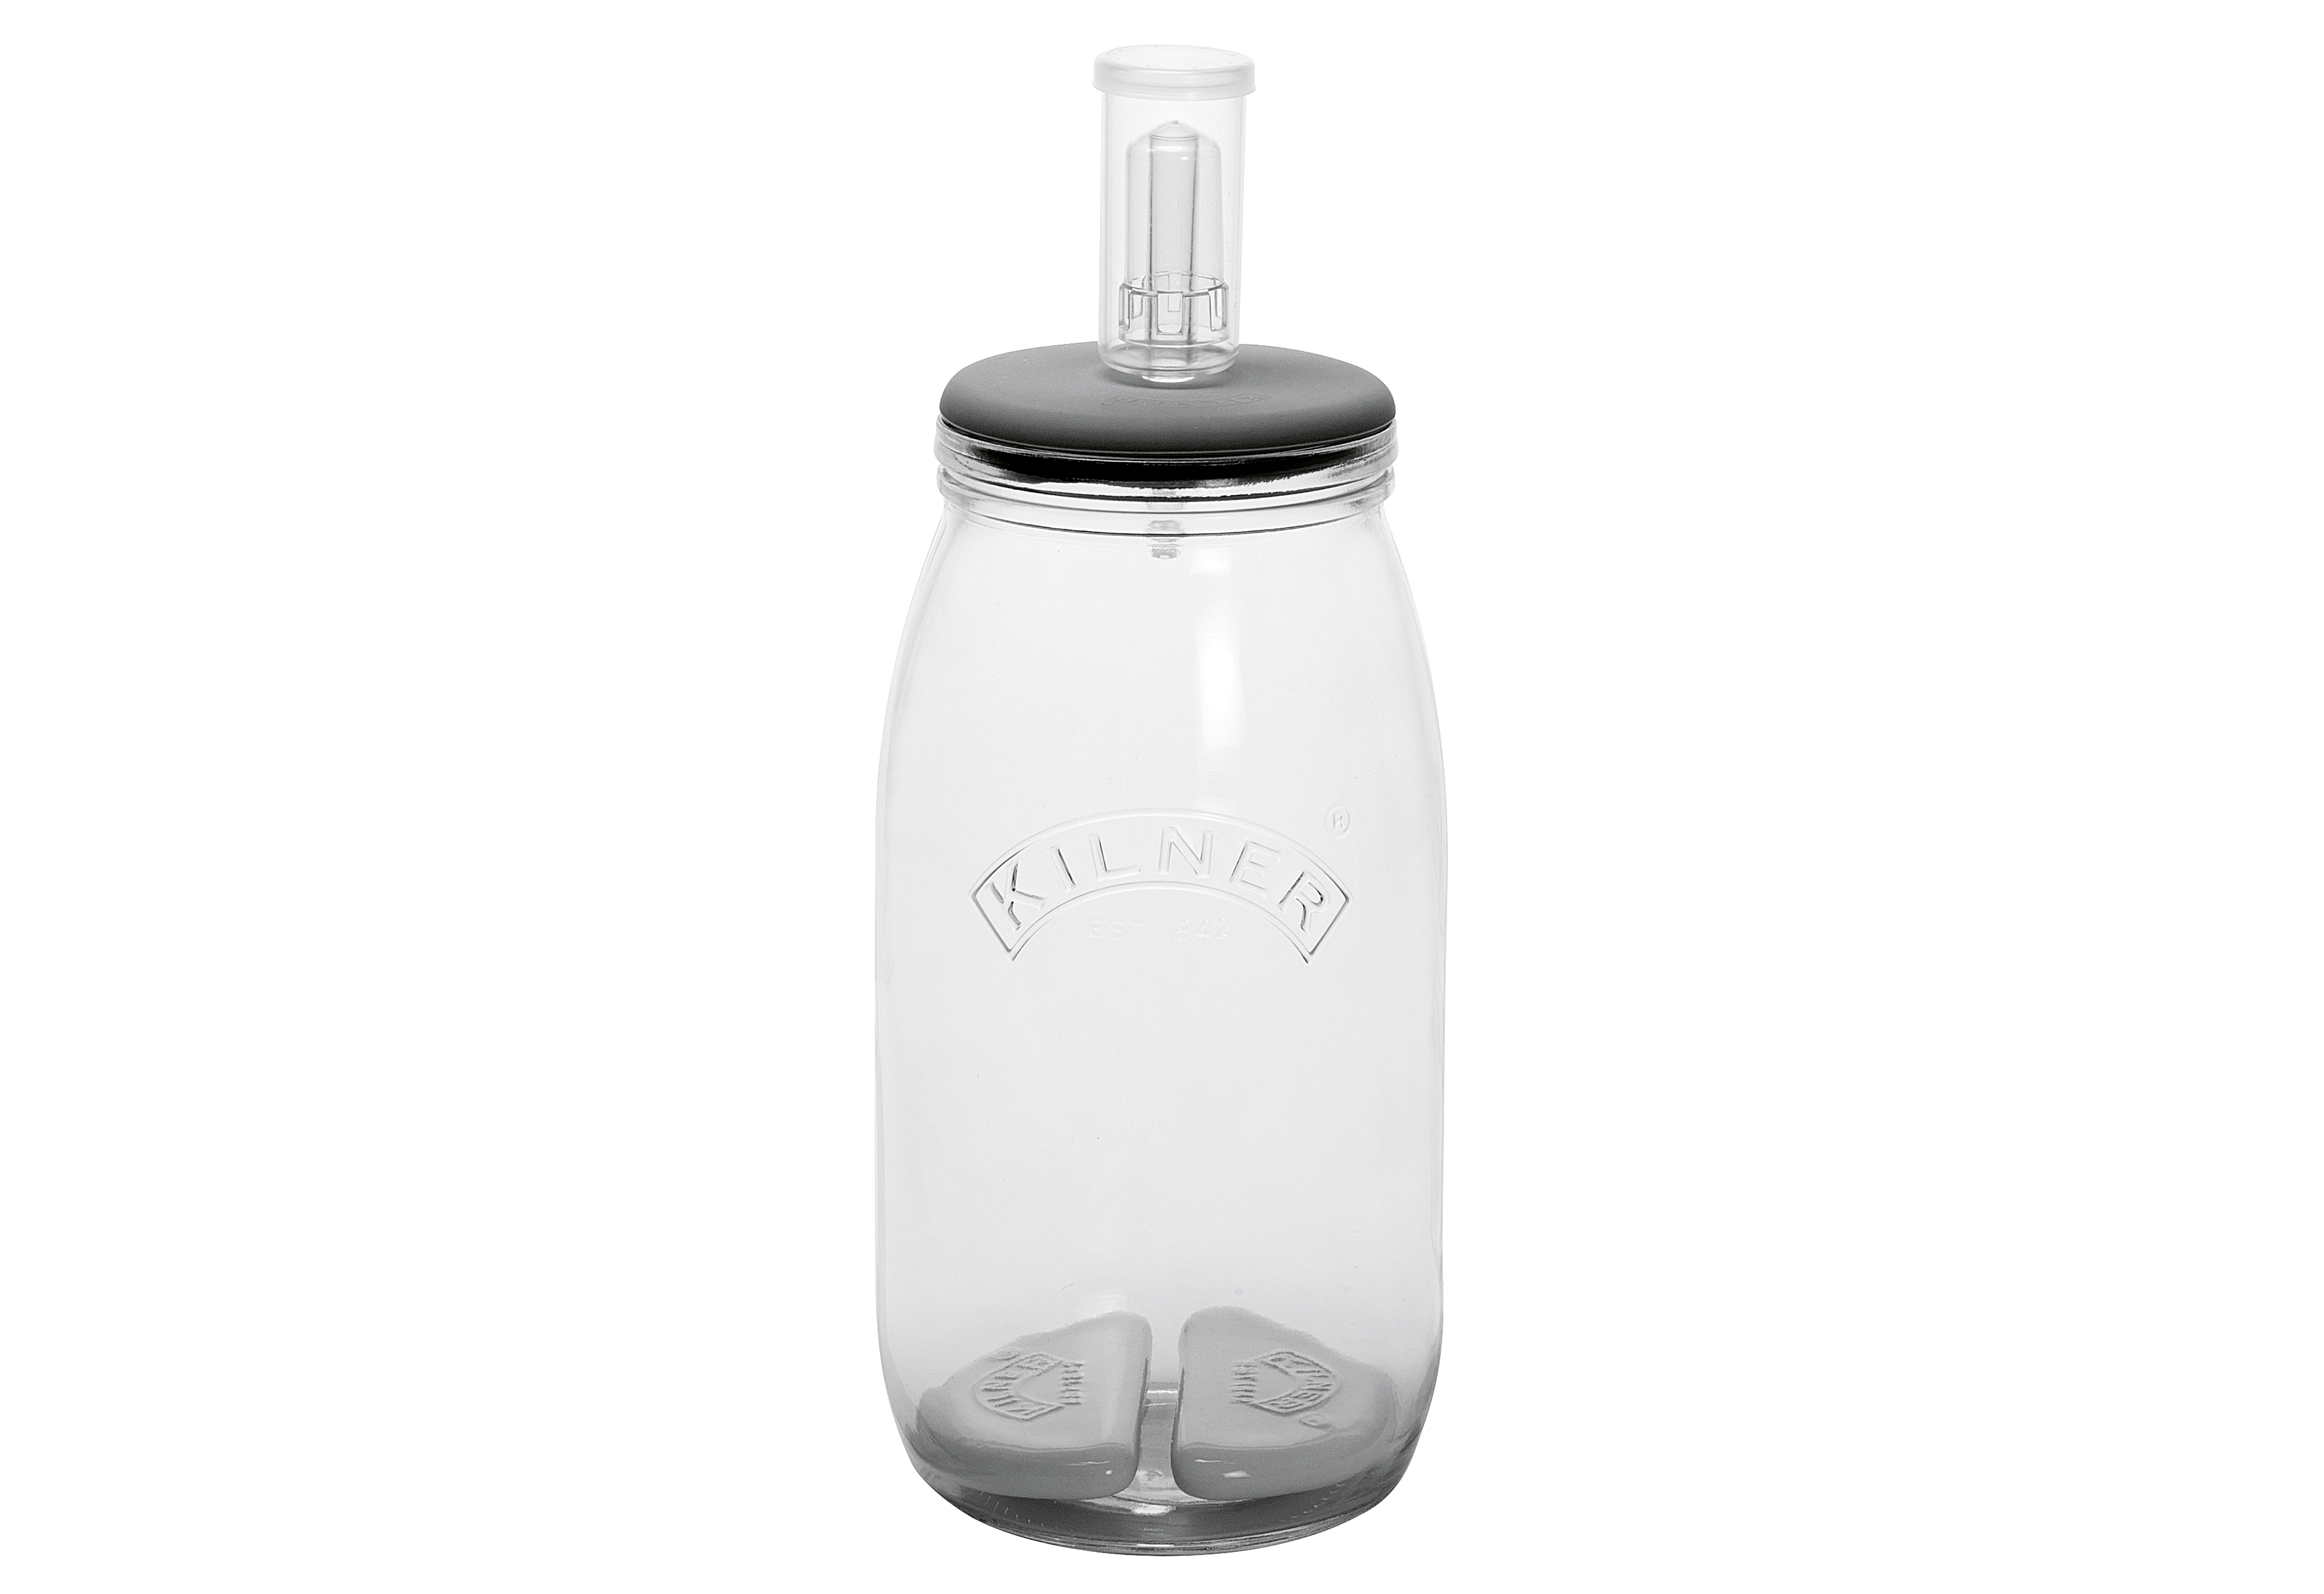 Fermentier-Set Glas / Silikon / Keramik 1 x 3 Liter-Schutzglas mit Silikon-Deckel,  